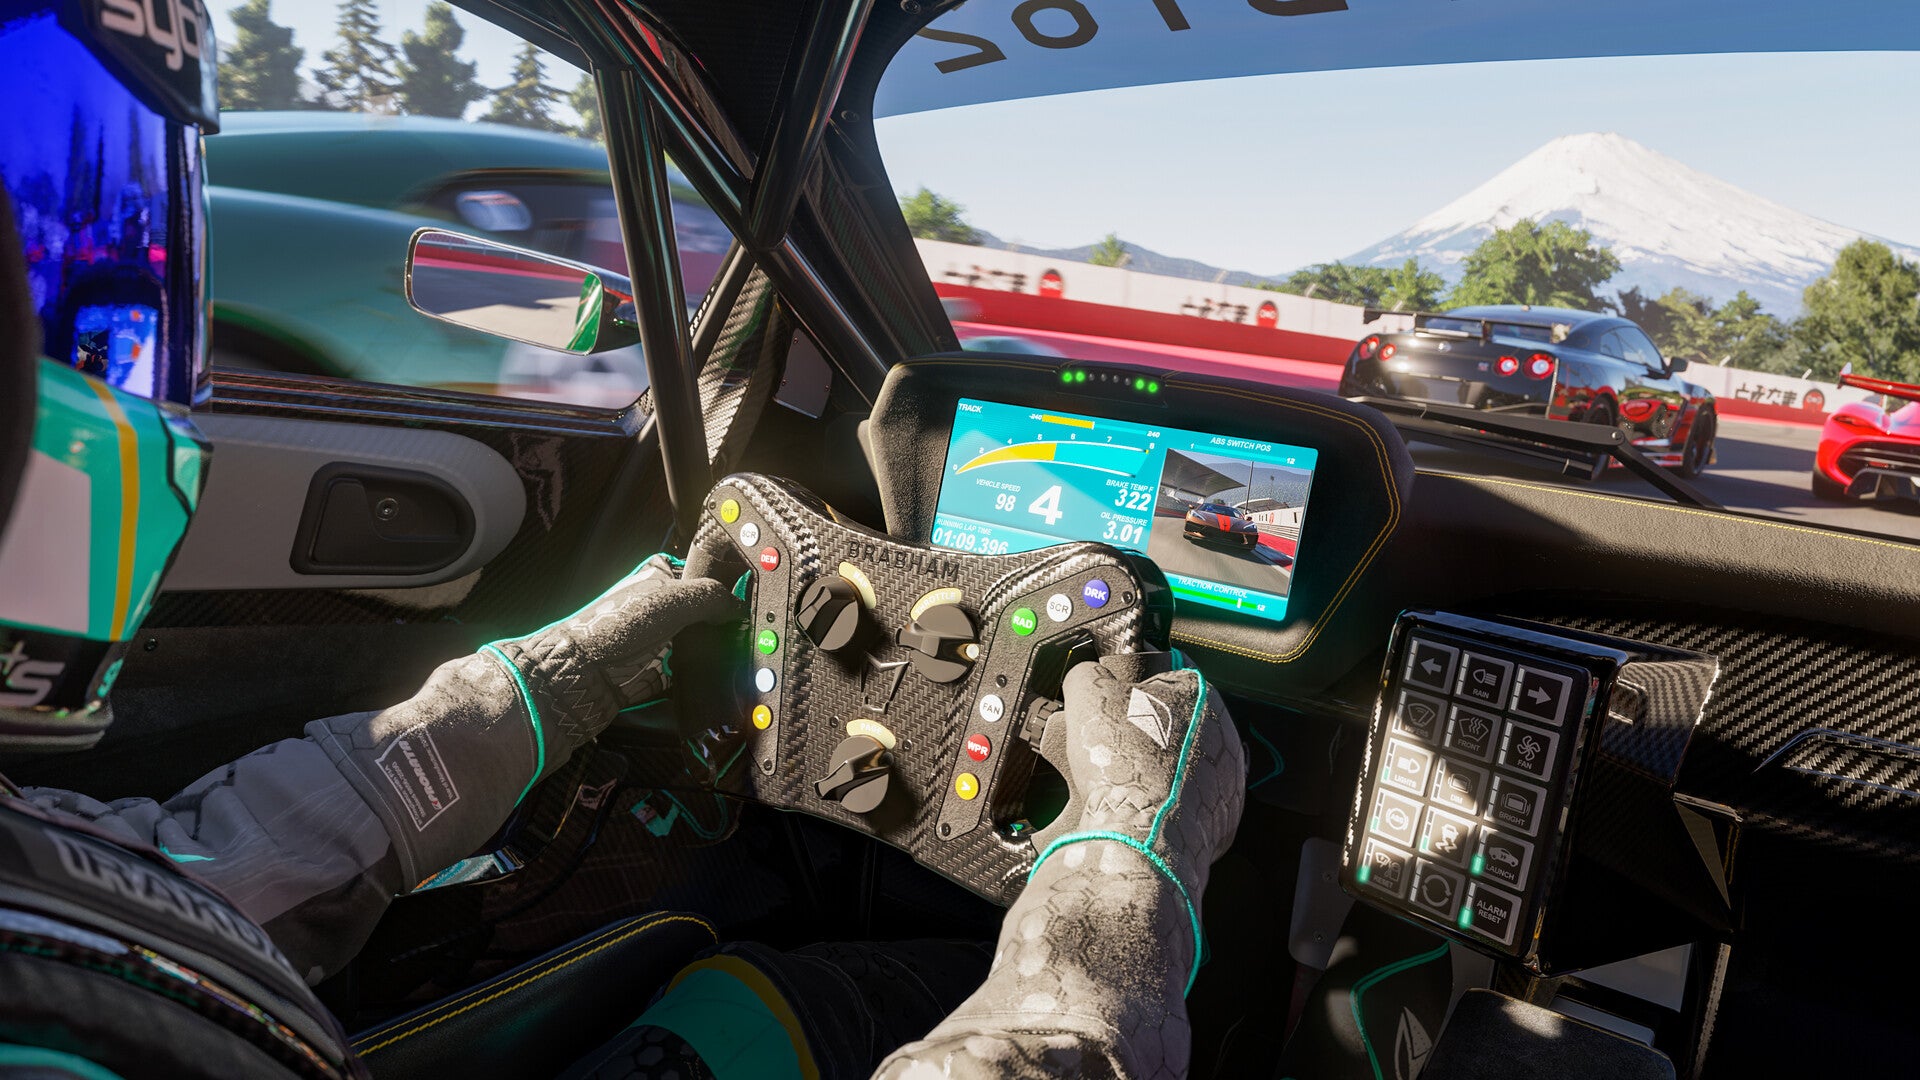 Forza Motorsport: Premium Edition